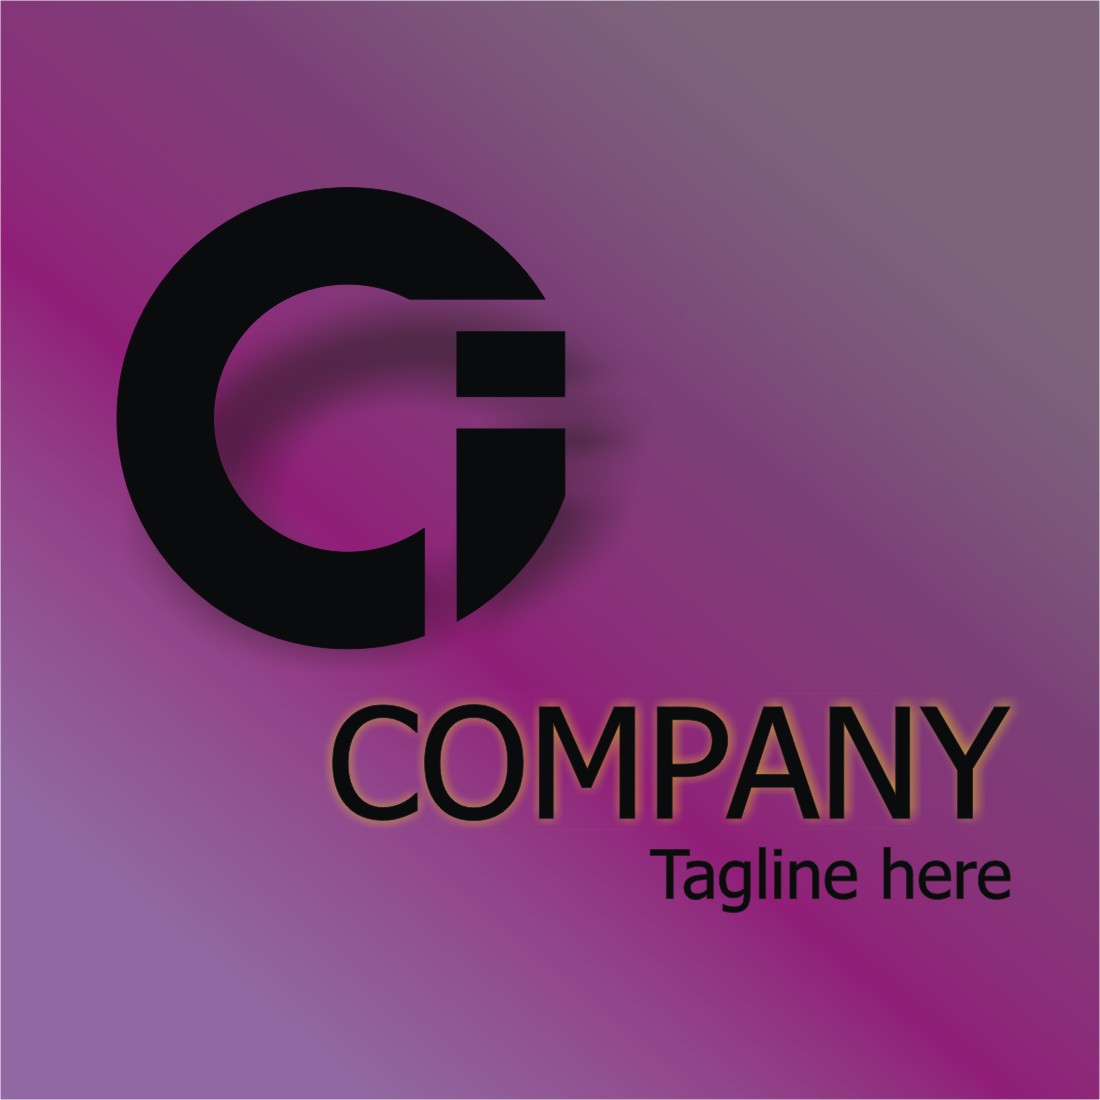 G monogram logo preview image.